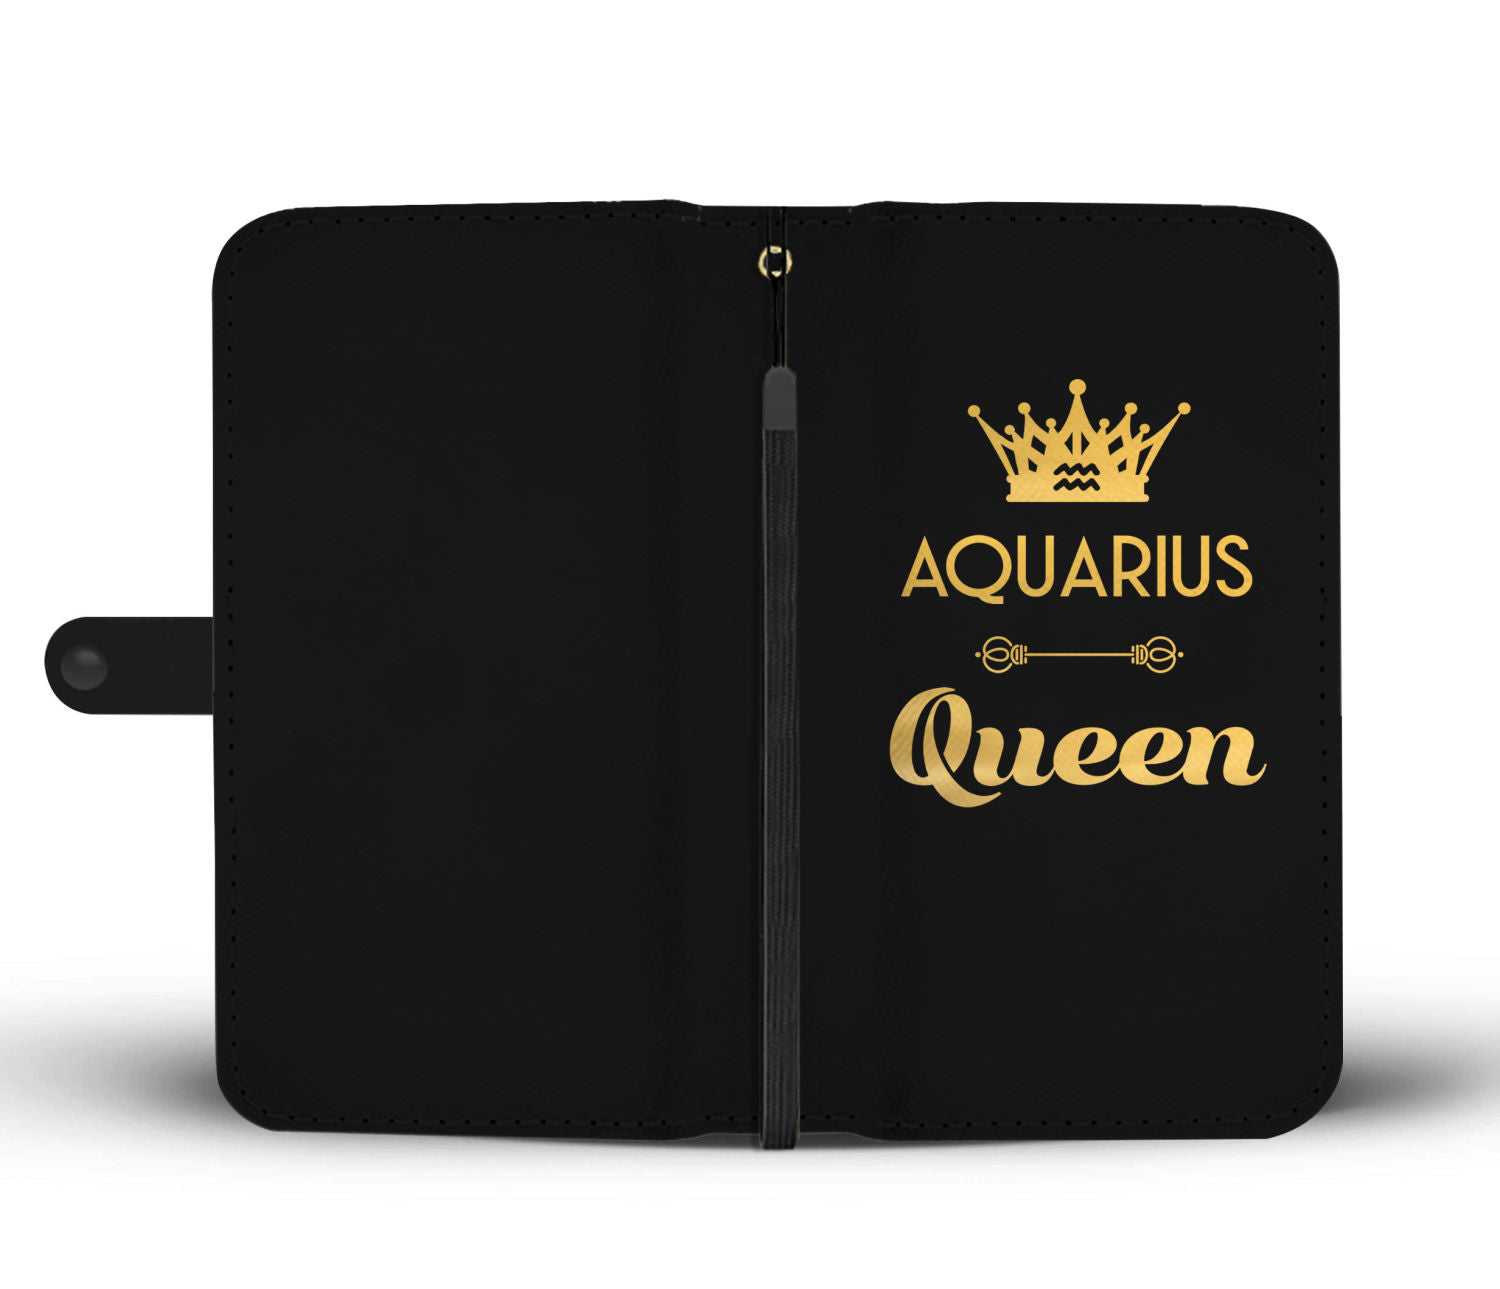 Aquarius Queen Phone Wallet and Wristlet Case